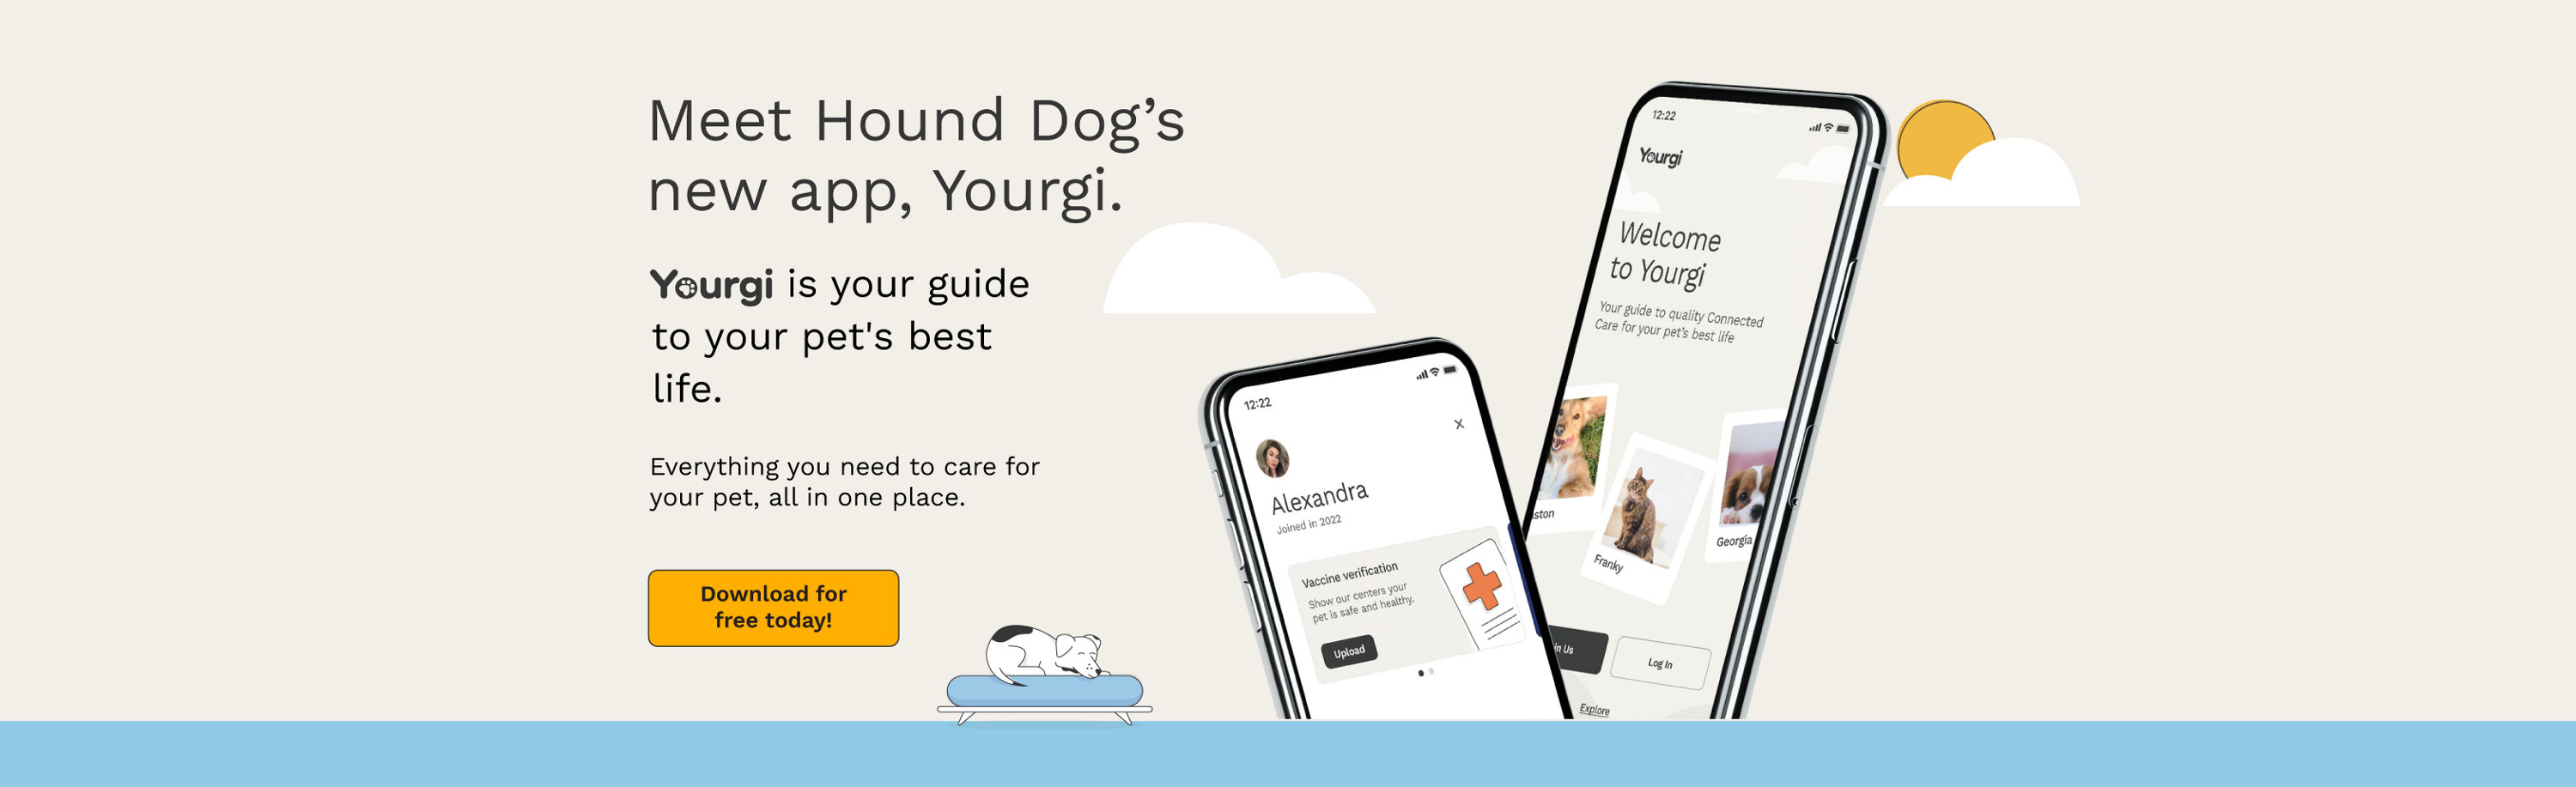 Meet Hound Dog's new app, Yourgi.